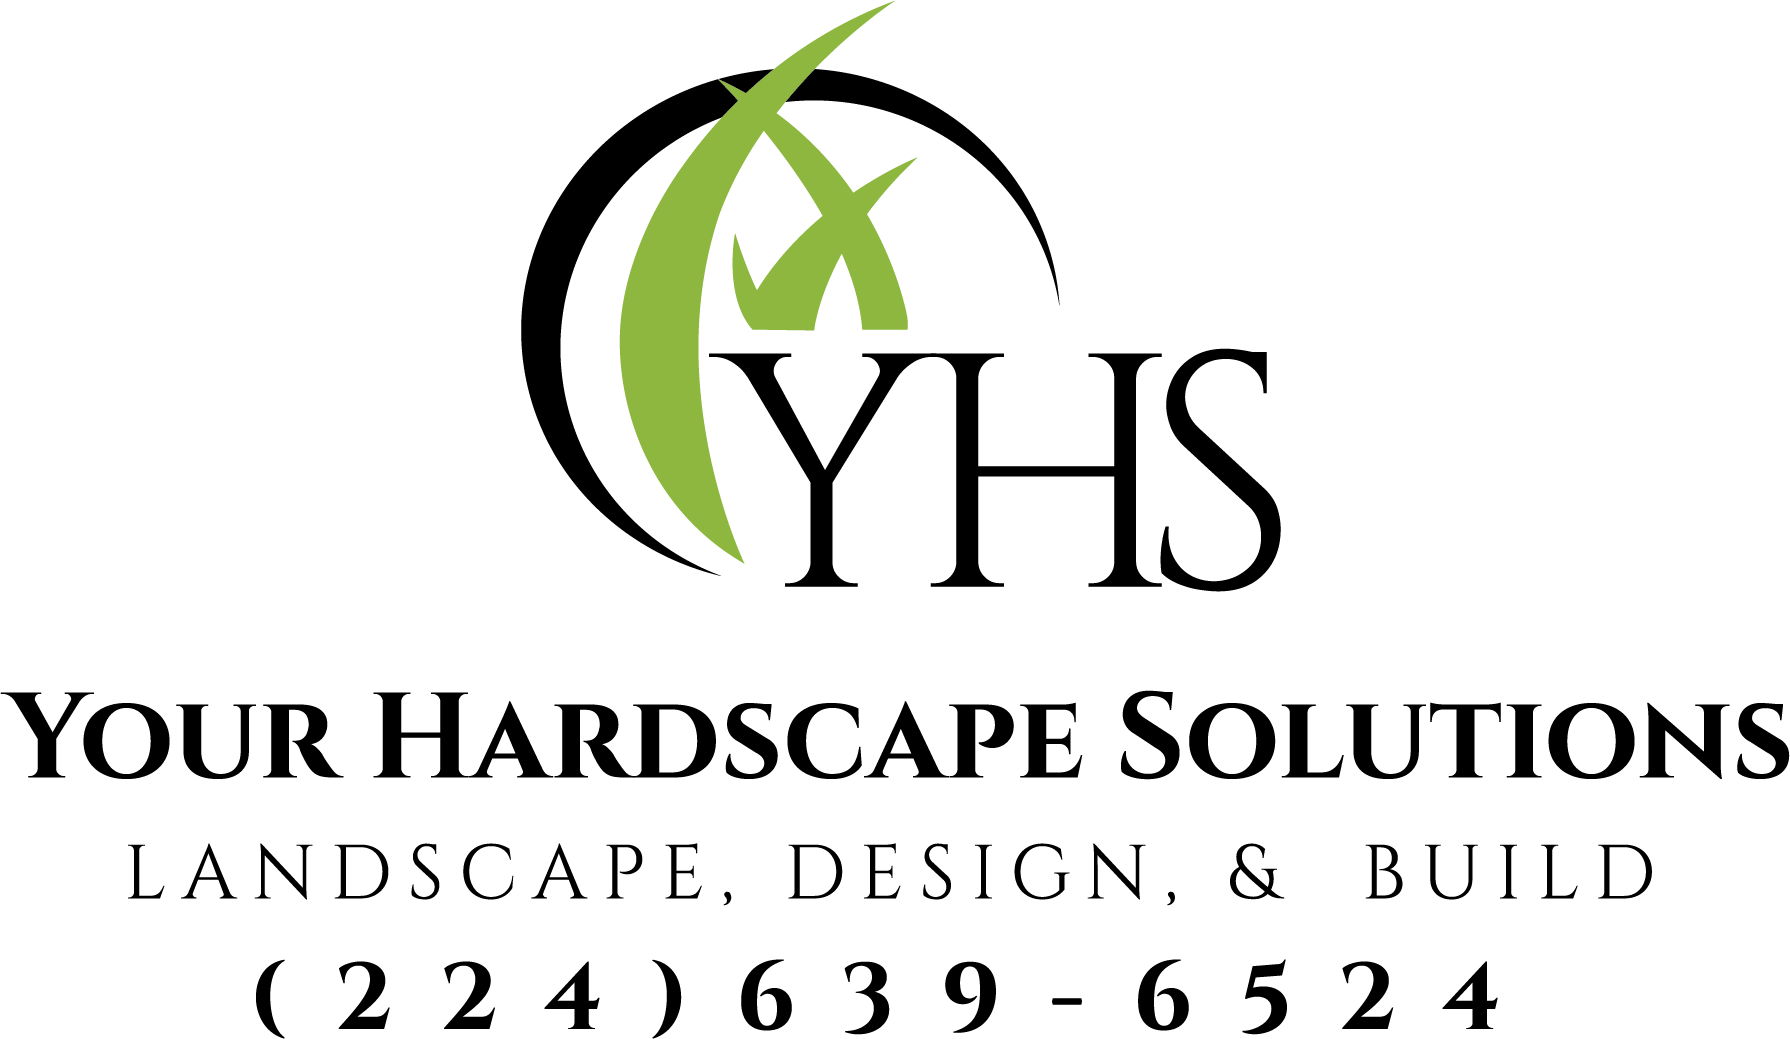 Y H S Landscape and Maintenance Logo